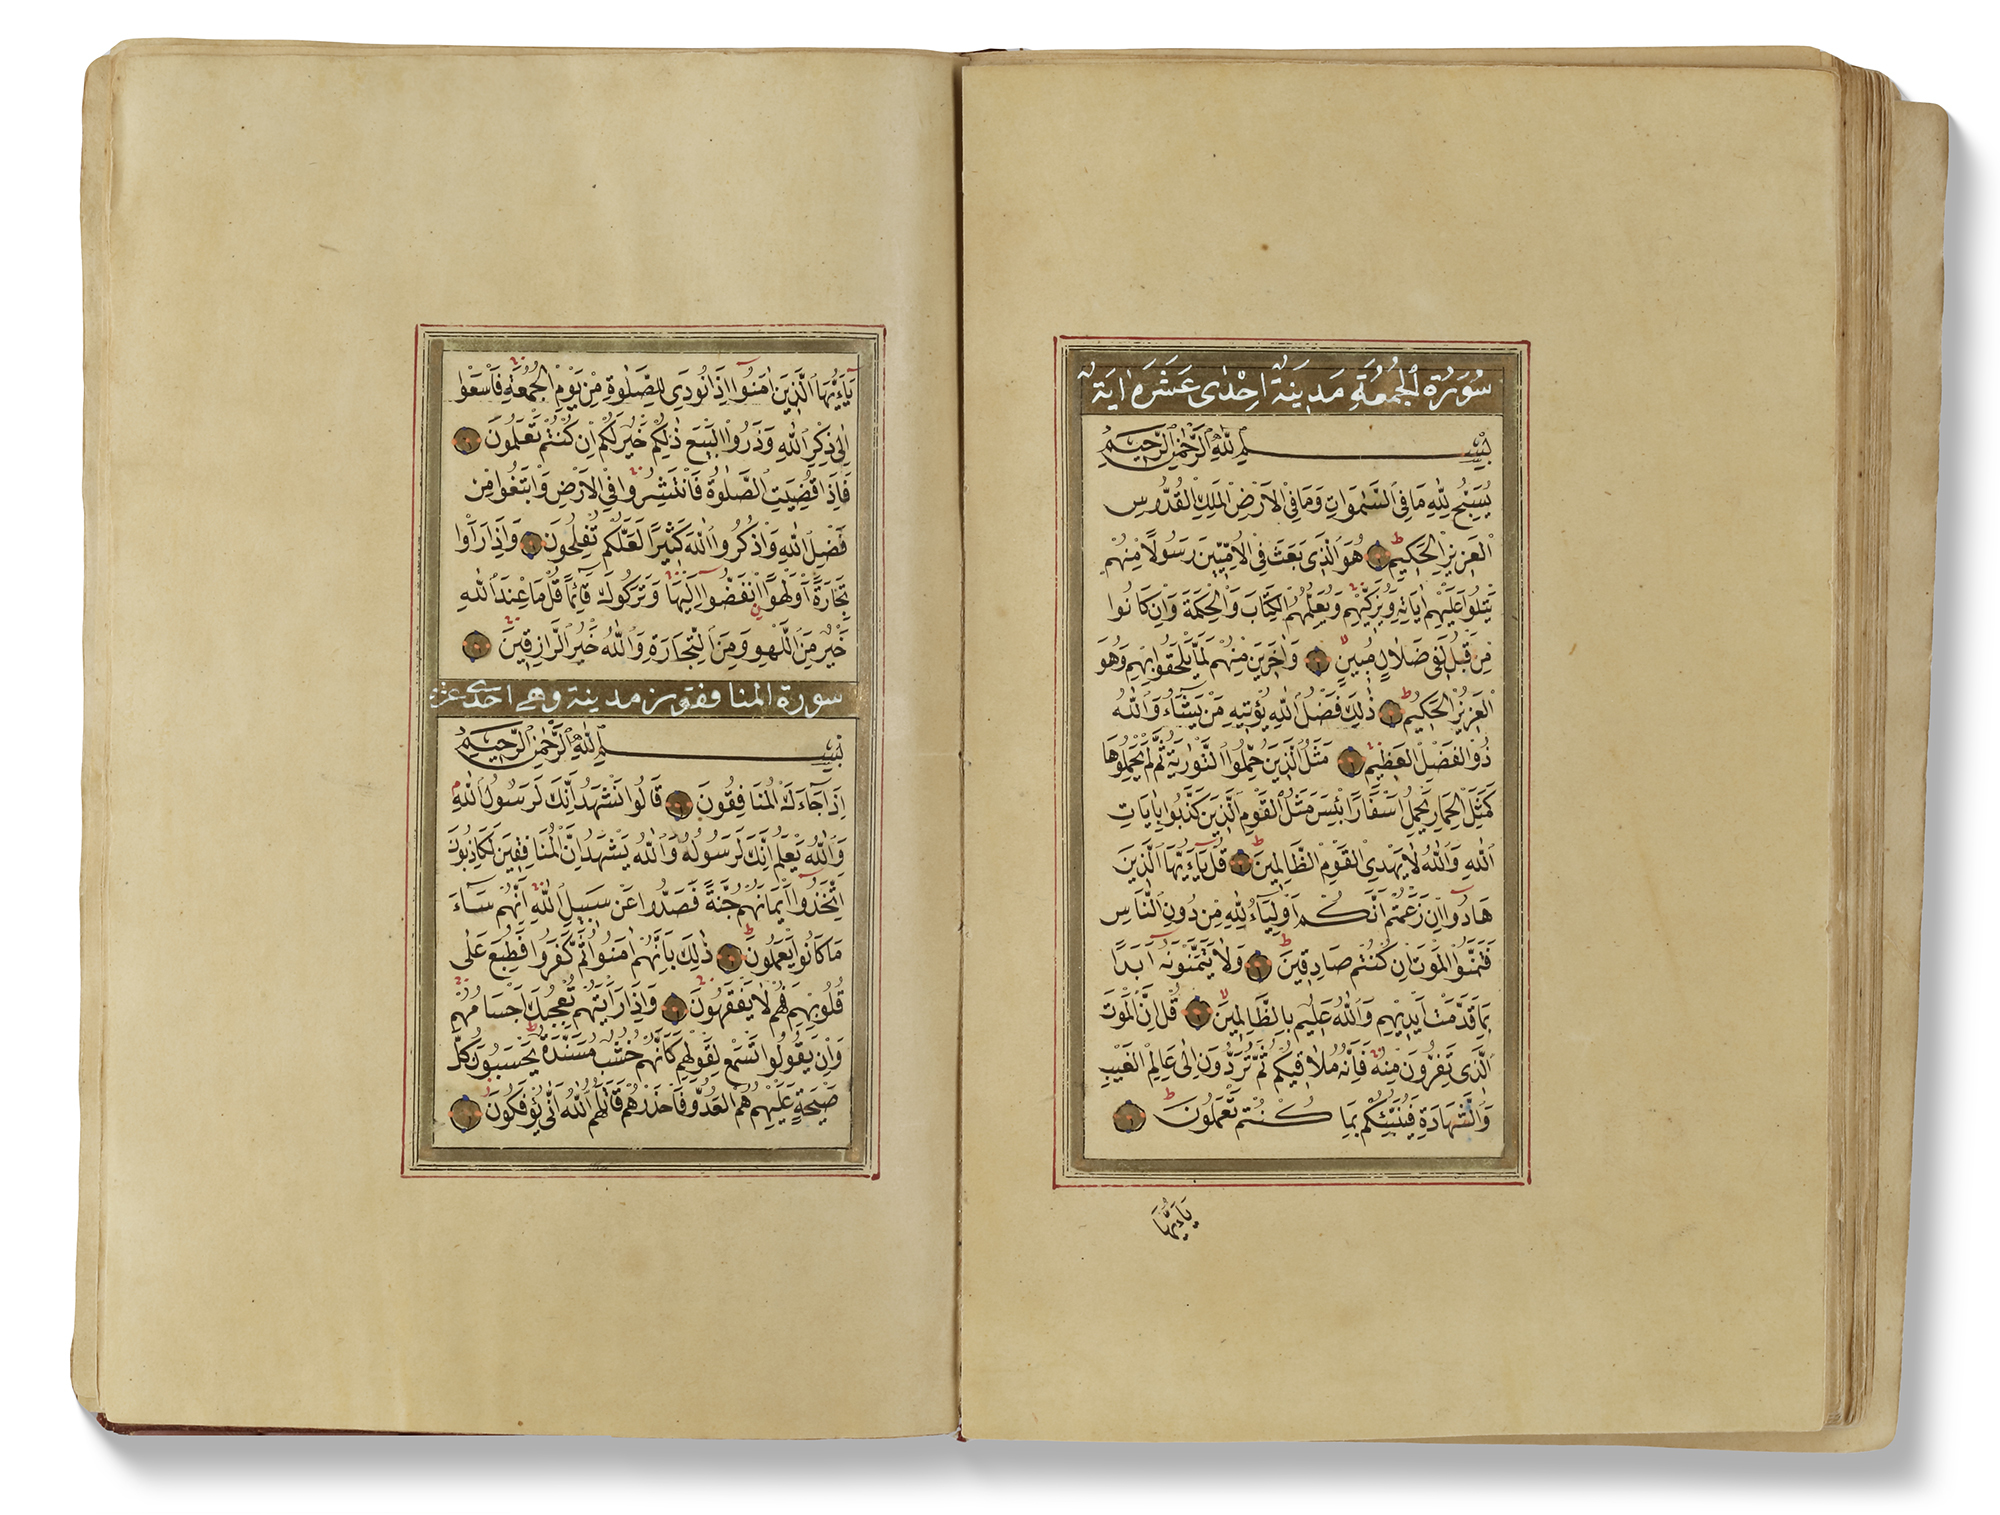 A FINE OTTOMAN QURAN, TURKEY, WRITTEN BY OMAR AL-FAWRABI STUDENT OF OMAR RUSHDI, DATED 1273 AH/1856 - Image 19 of 20